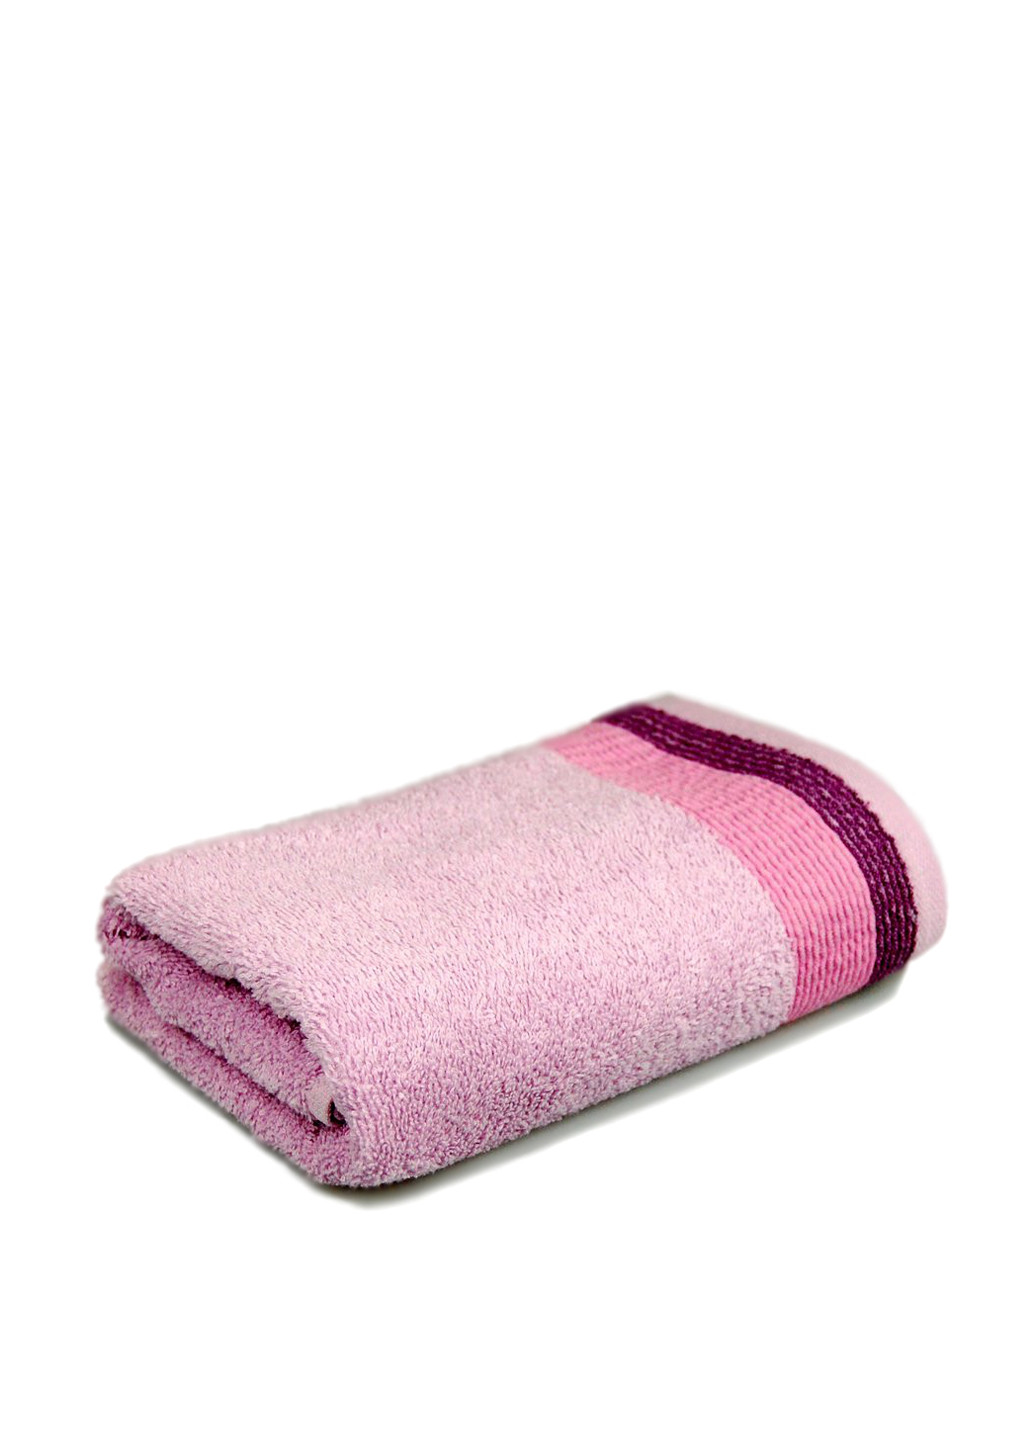 Home Line полотенце, 45х85 см однотонный розово-лиловый производство - Индия